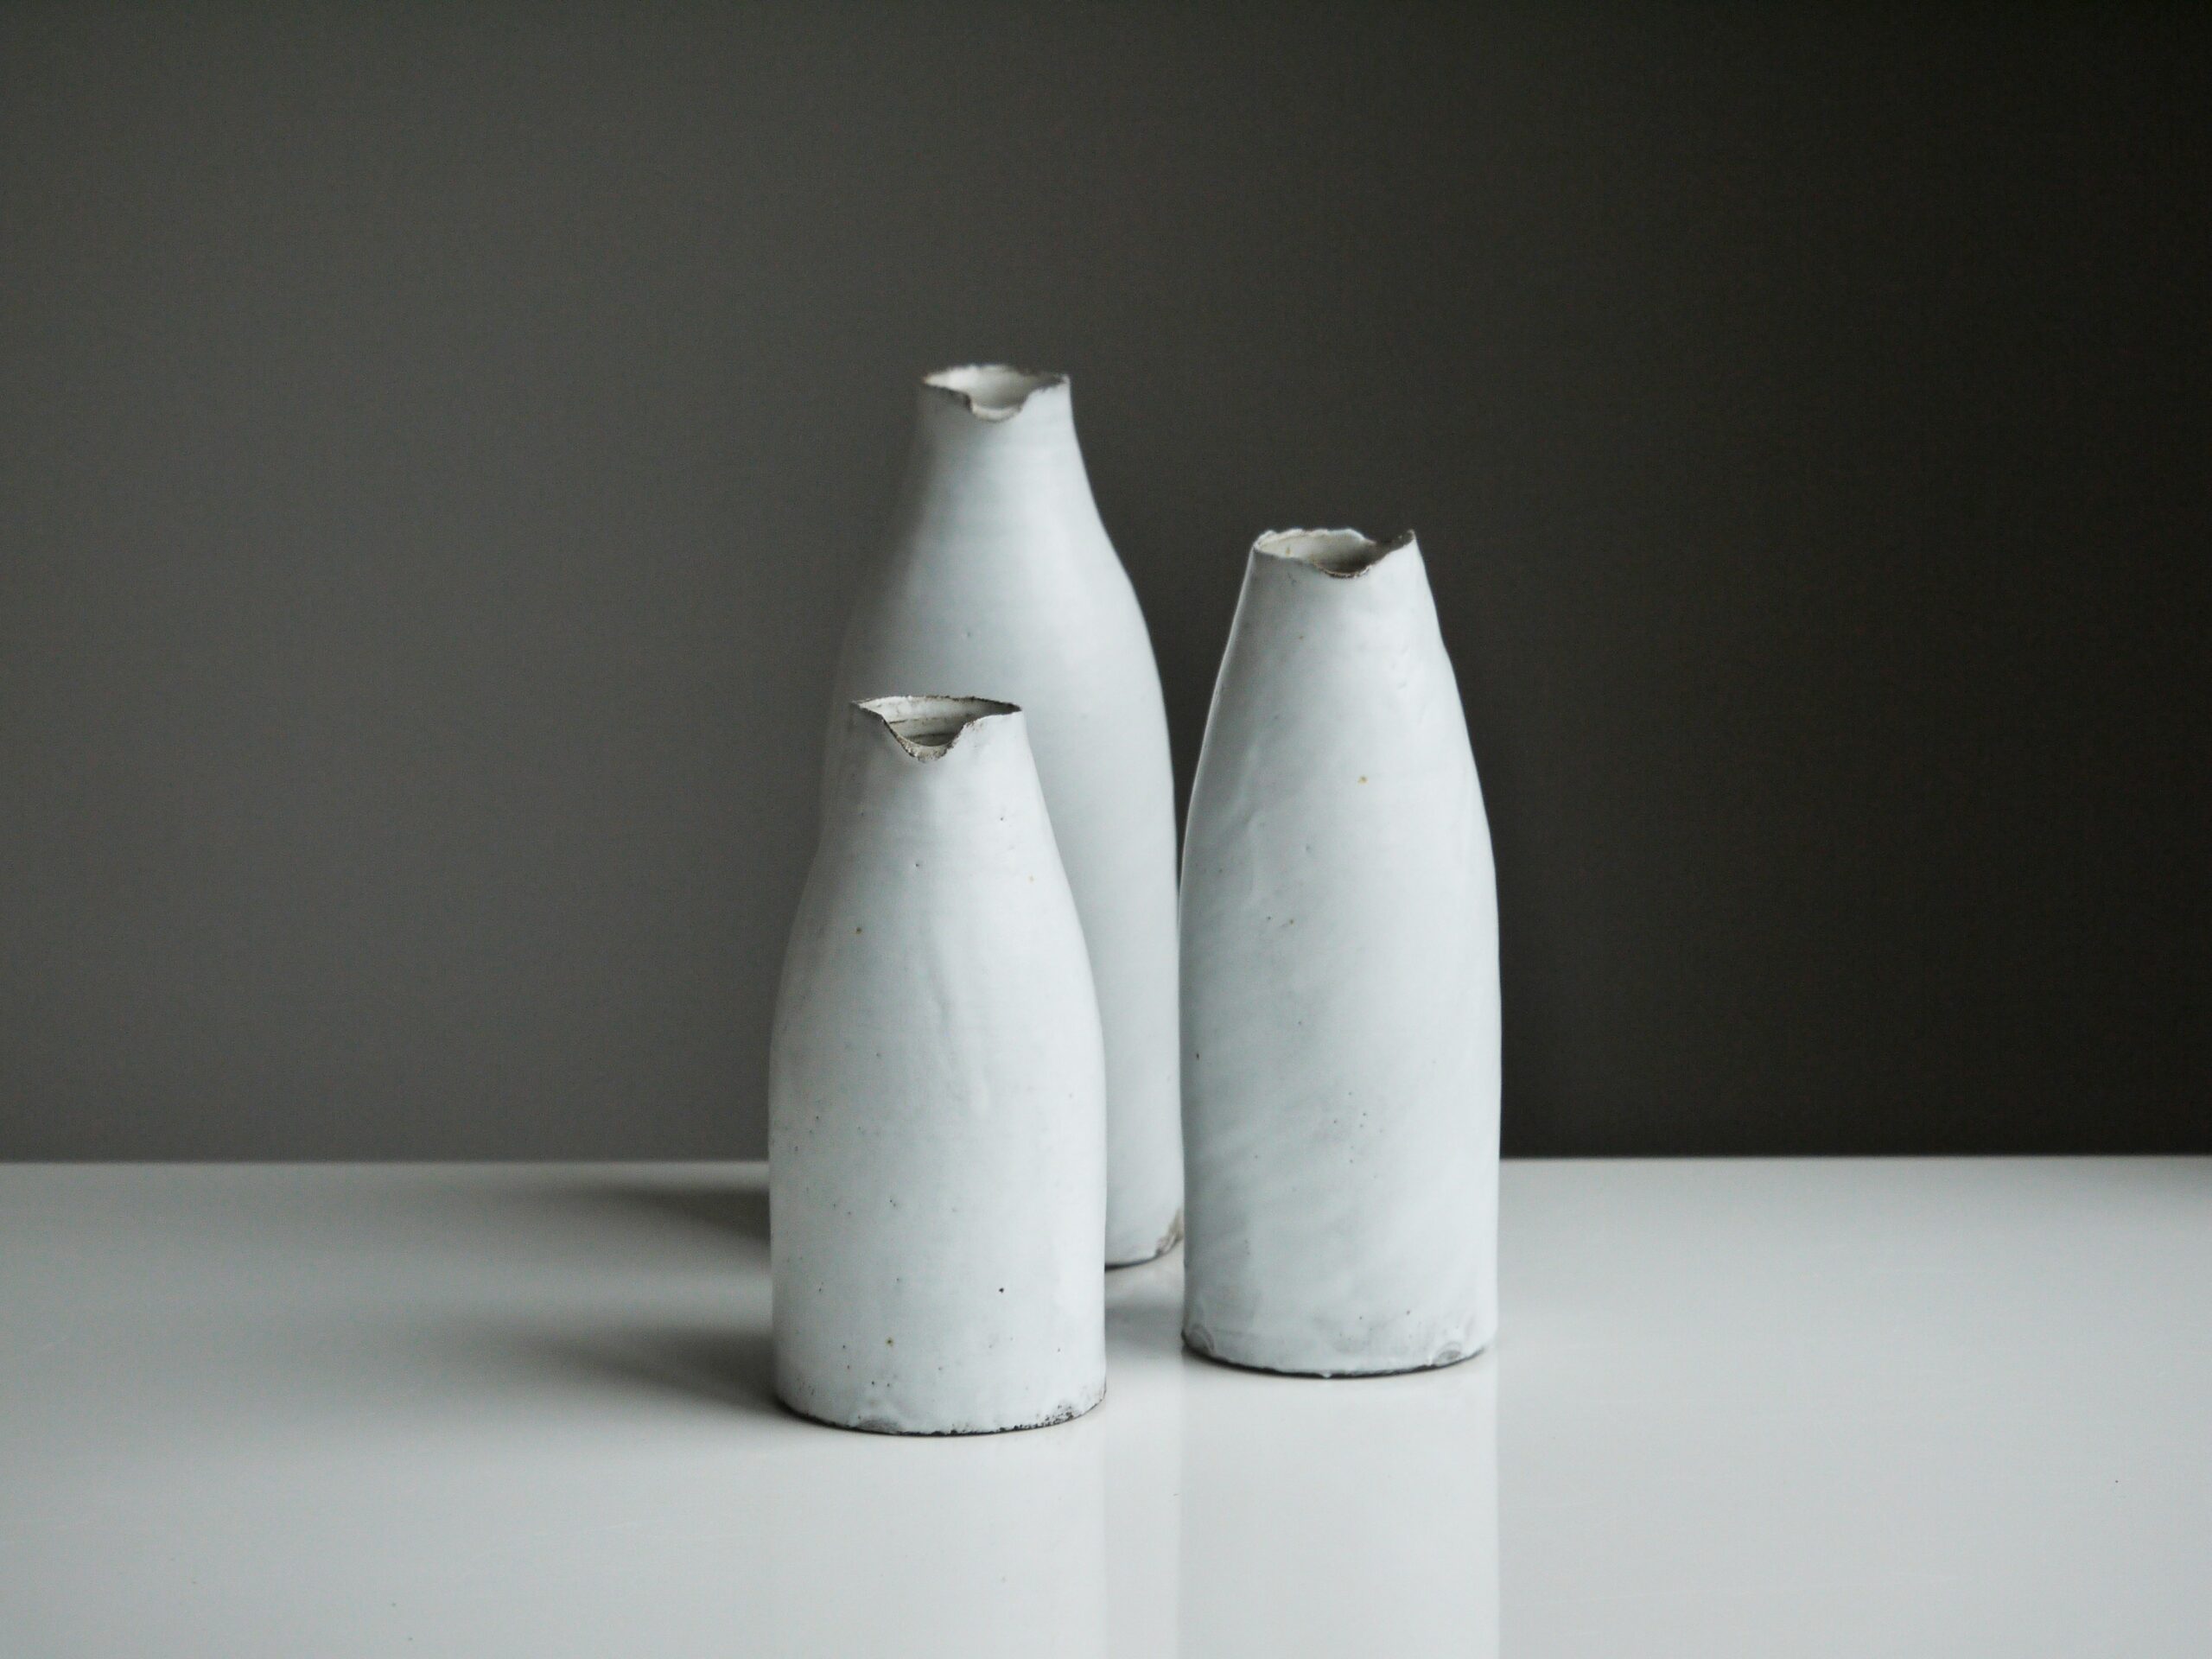 three white vases on table